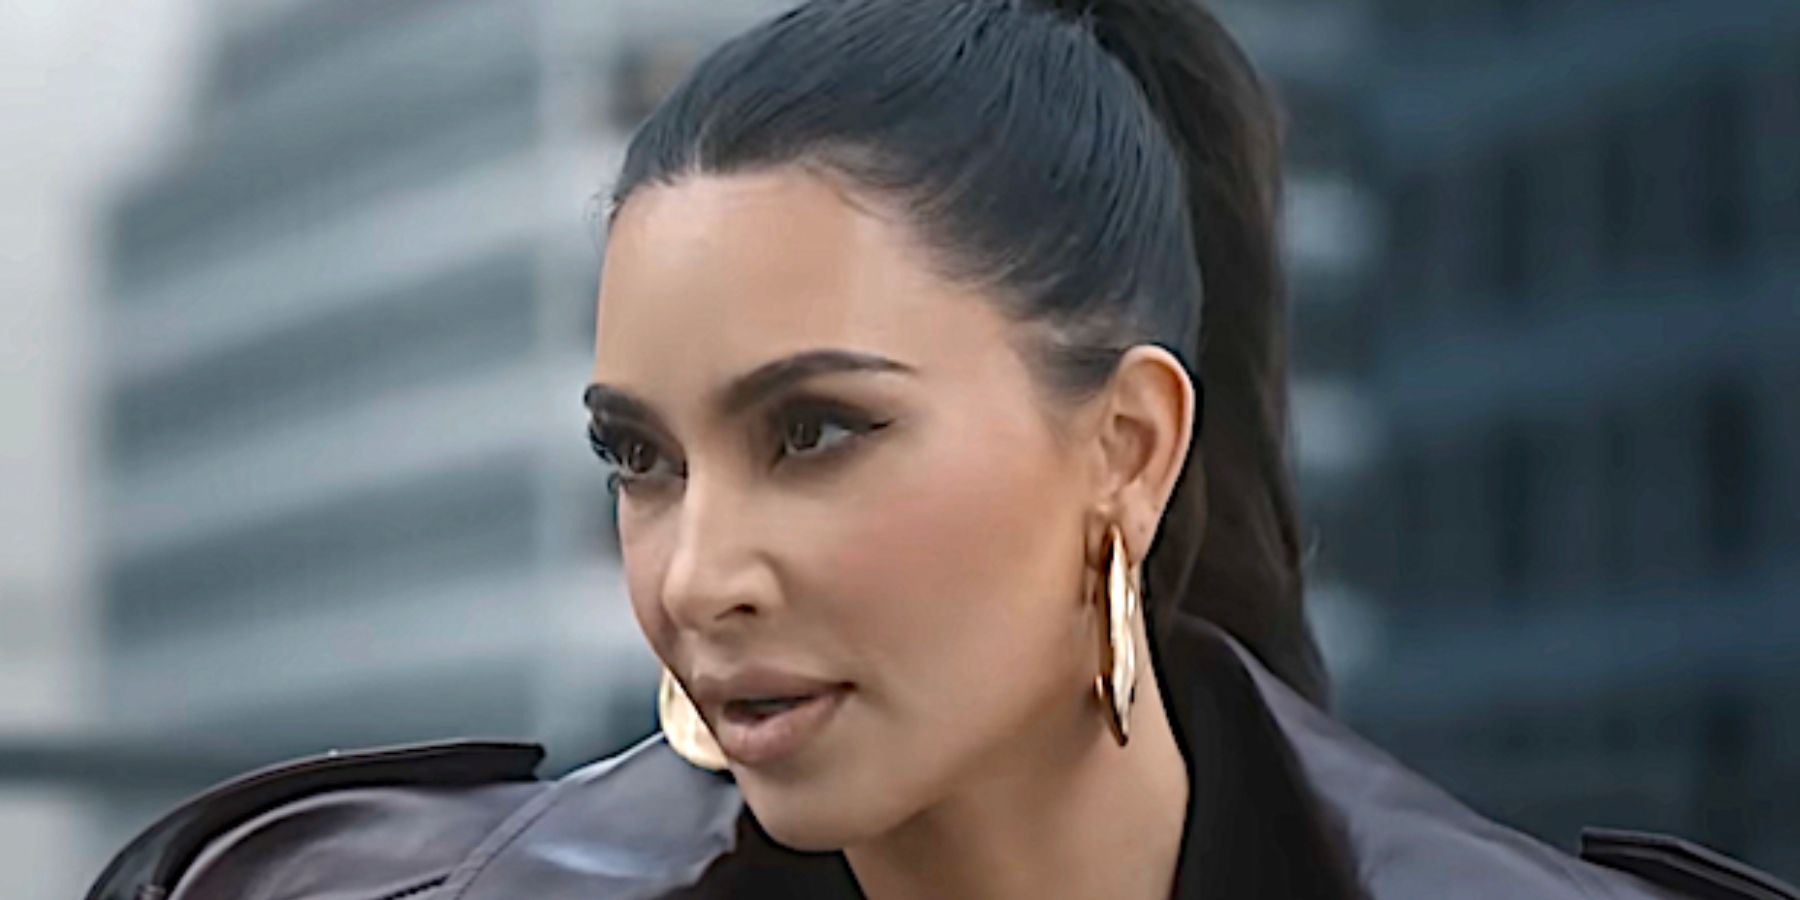 Sibhoan (Kim Kardashian) in American Horror Story: Delicate